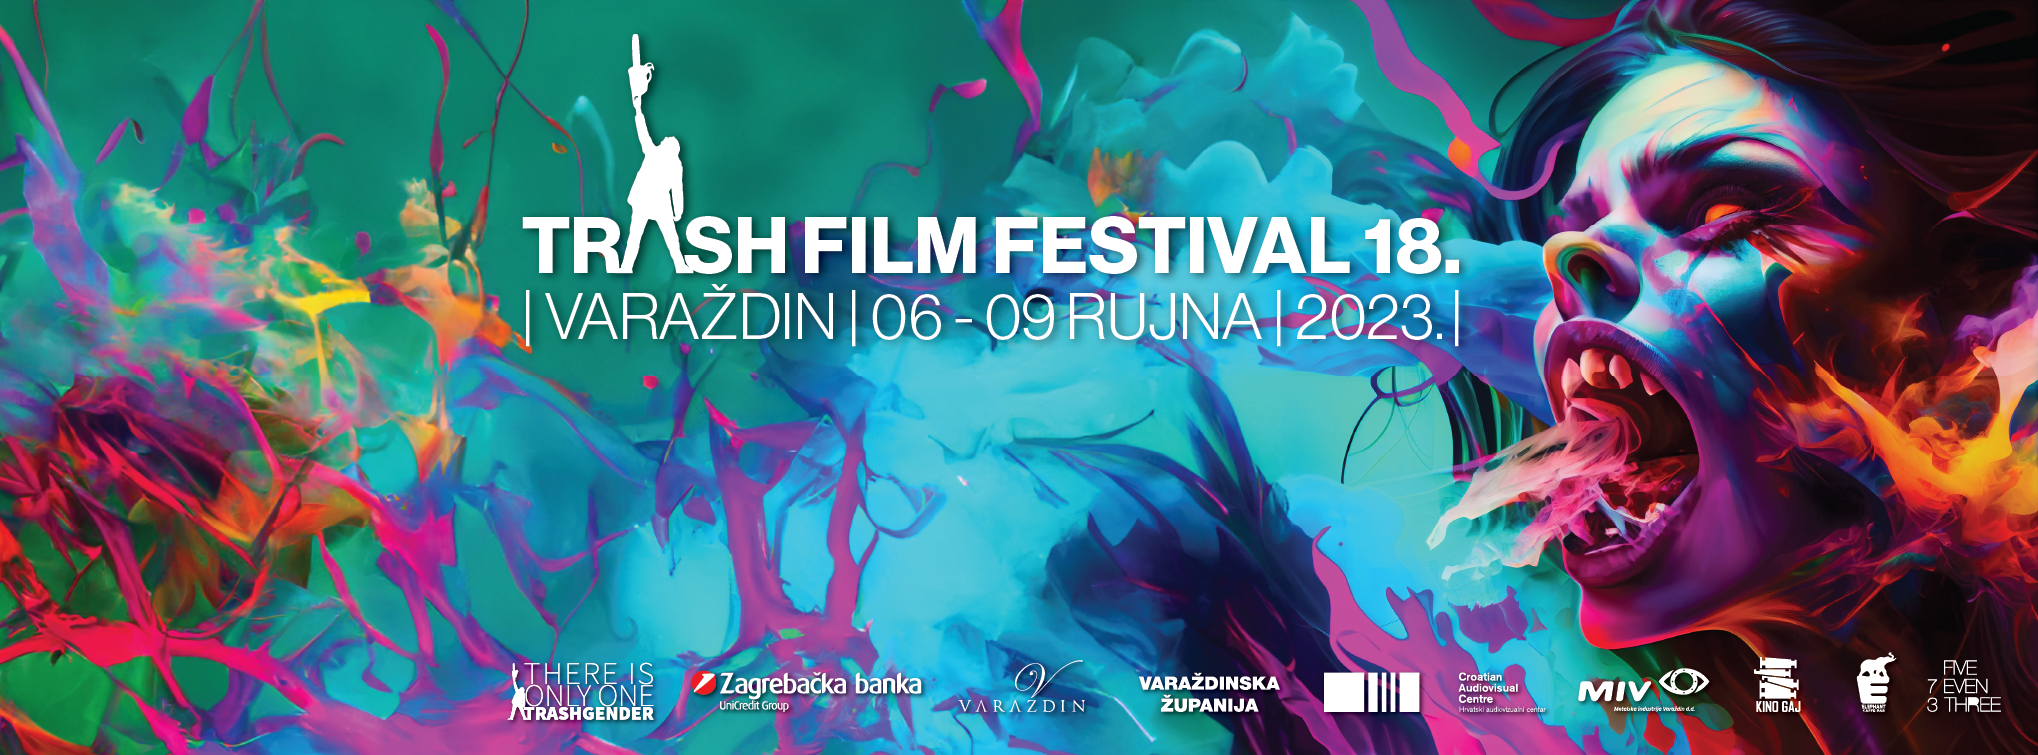 Trash Film Festival XVIII